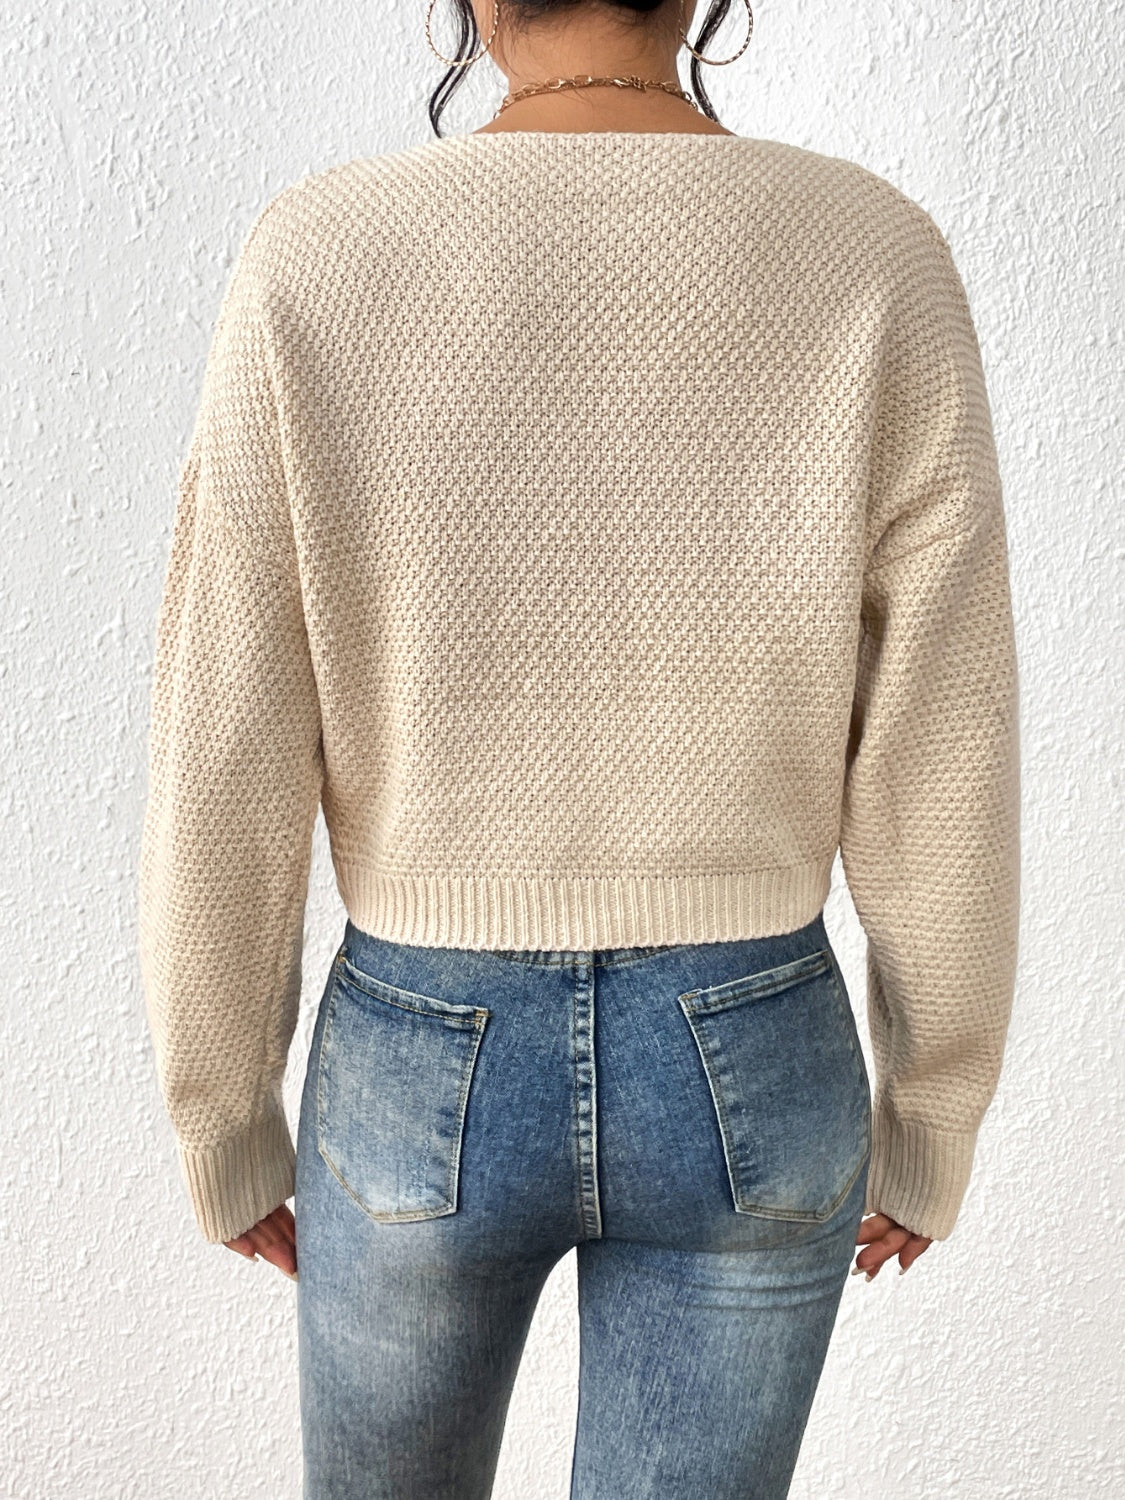 Cable-Knit Slit Drop Shoulder Sweater